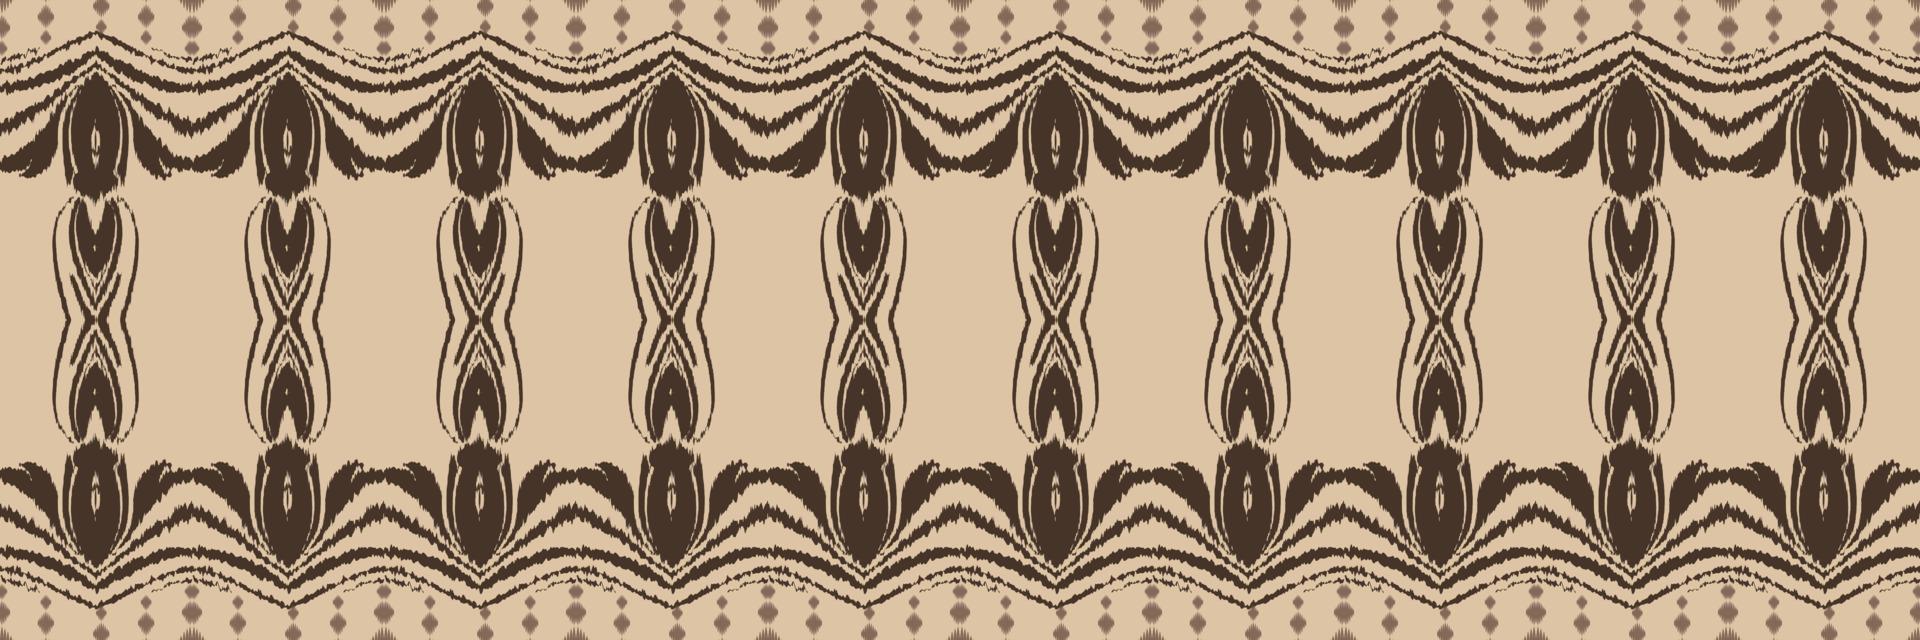 ikat tessuto tribale astratto senza soluzione di continuità modello. etnico geometrico ikkat batik digitale vettore tessile design per stampe tessuto saree Mughal spazzola simbolo andane struttura Kurti kurtis kurtas